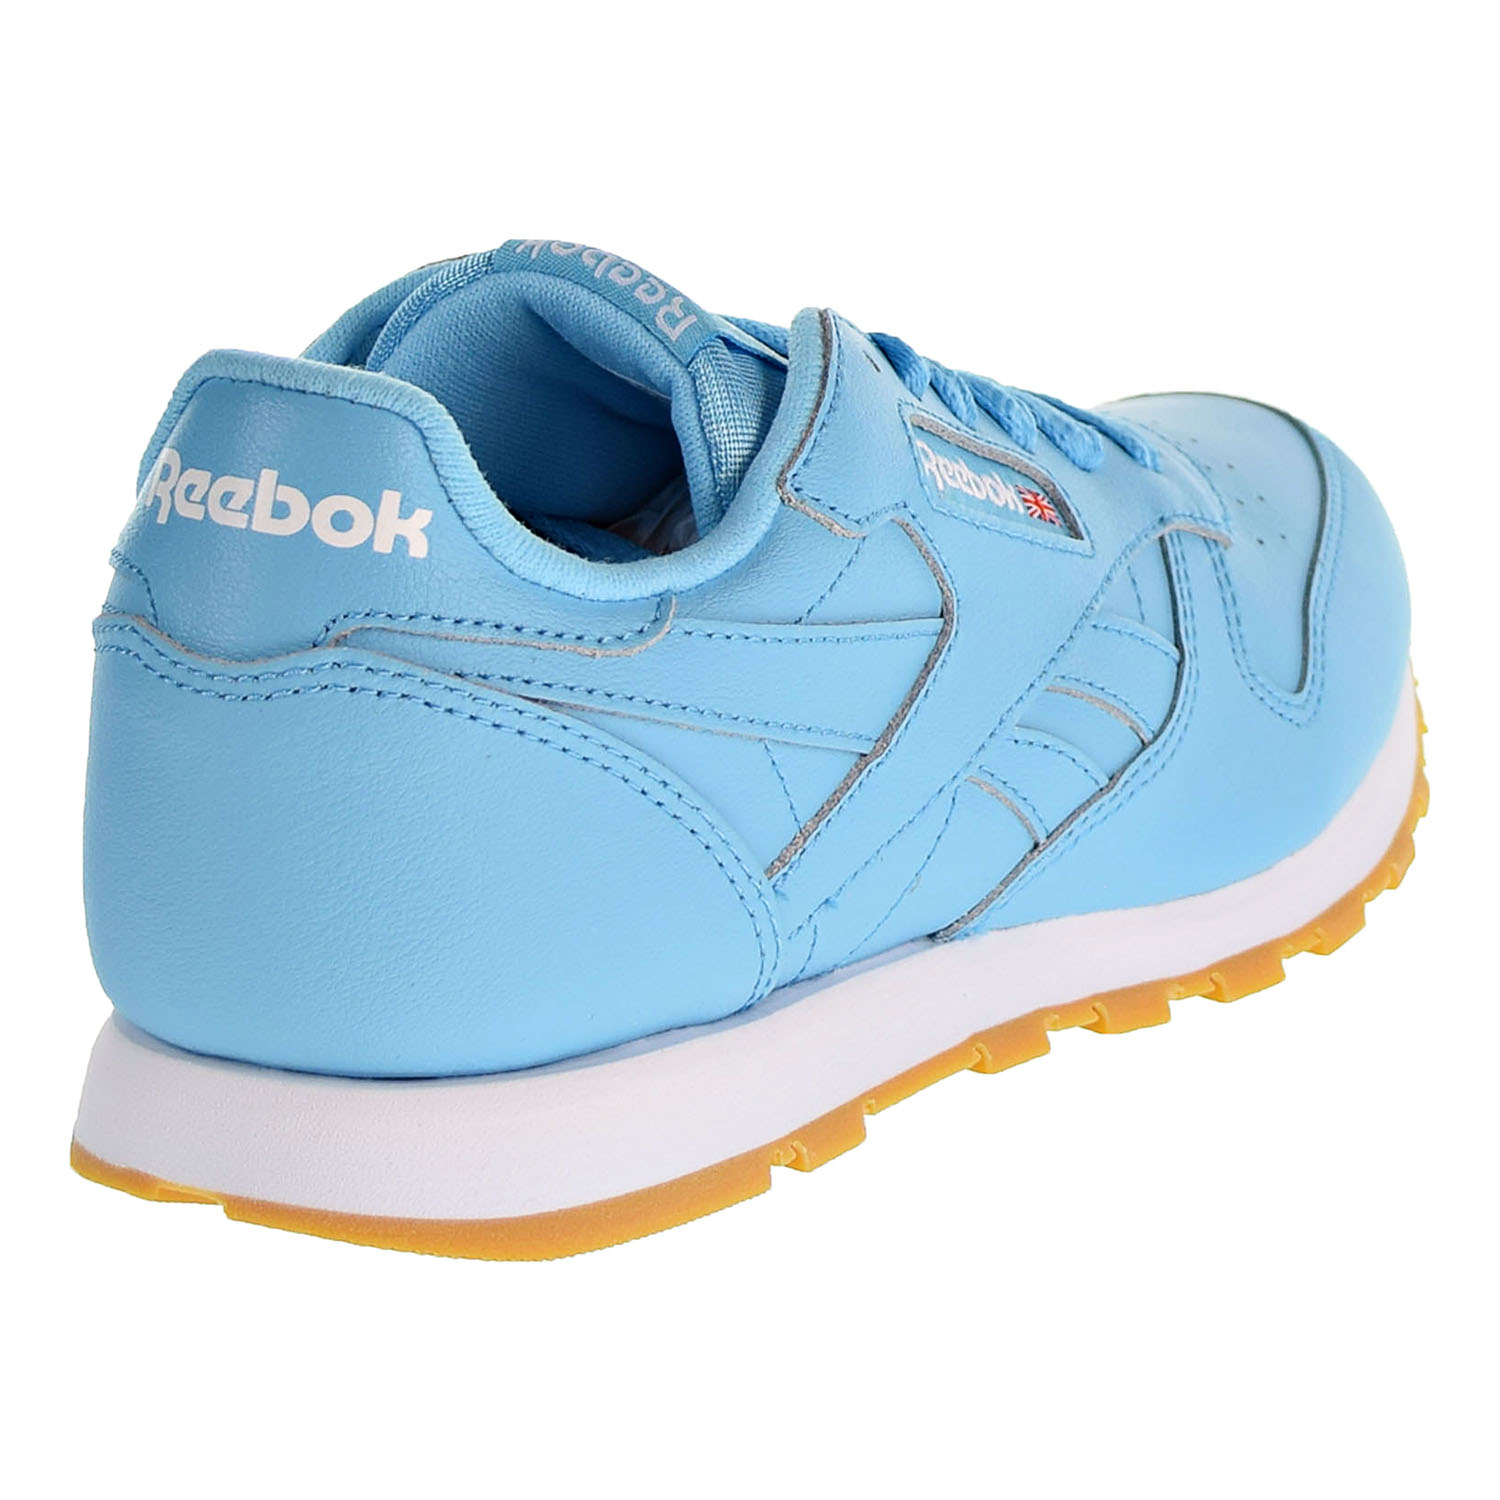 Reebok Classic Leather Gum Boys Shoes Crisp Blue/White/Gum cn4095 - image 3 of 6